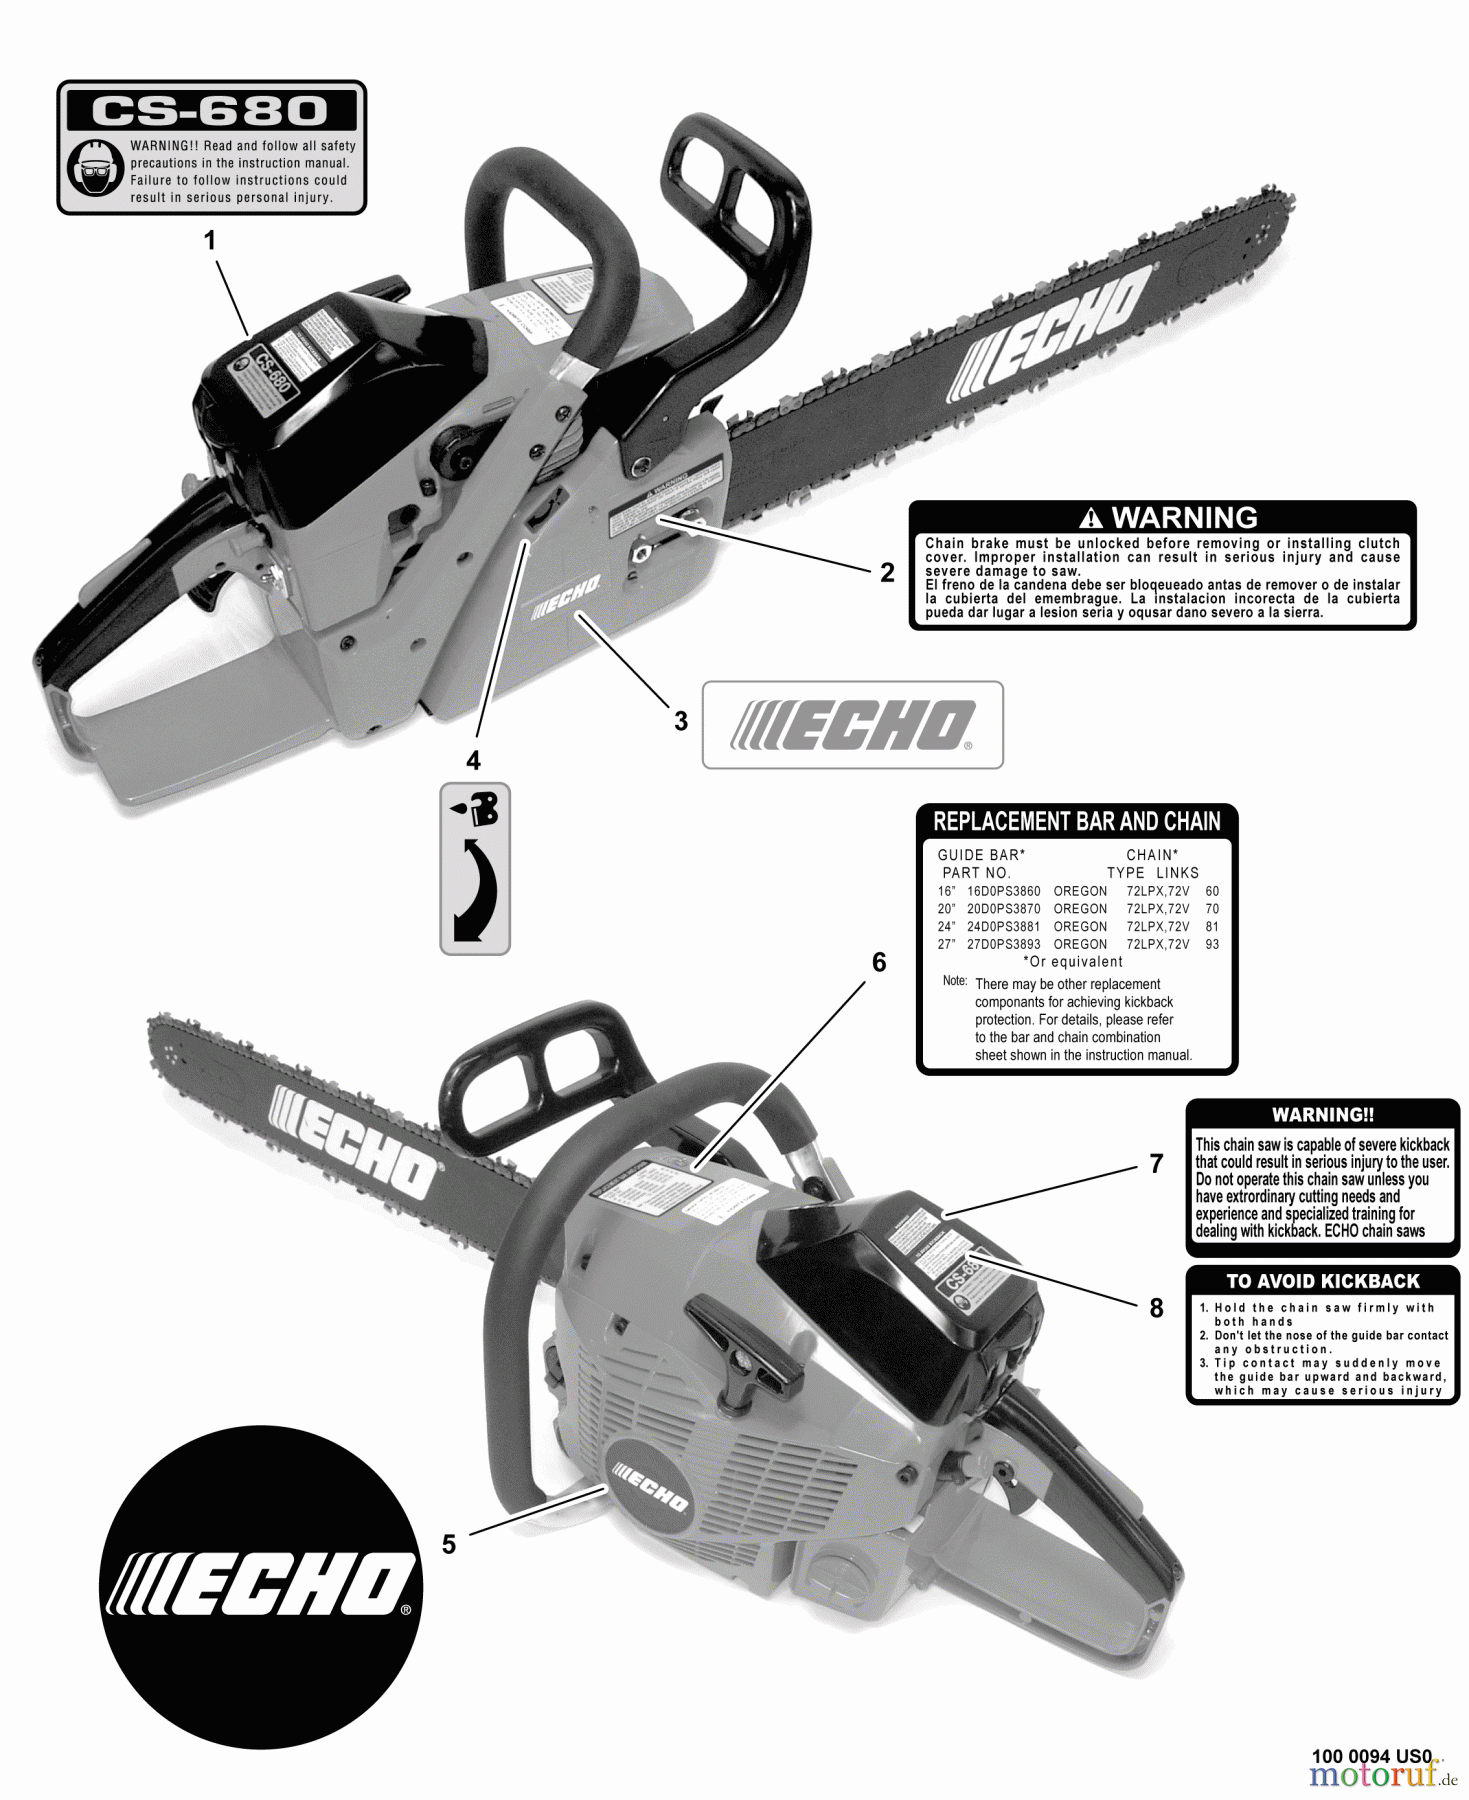  Echo Sägen, Kettensägen CS-680 - Echo Chainsaw, S/N: C03203001001 - C03203999999 Labels